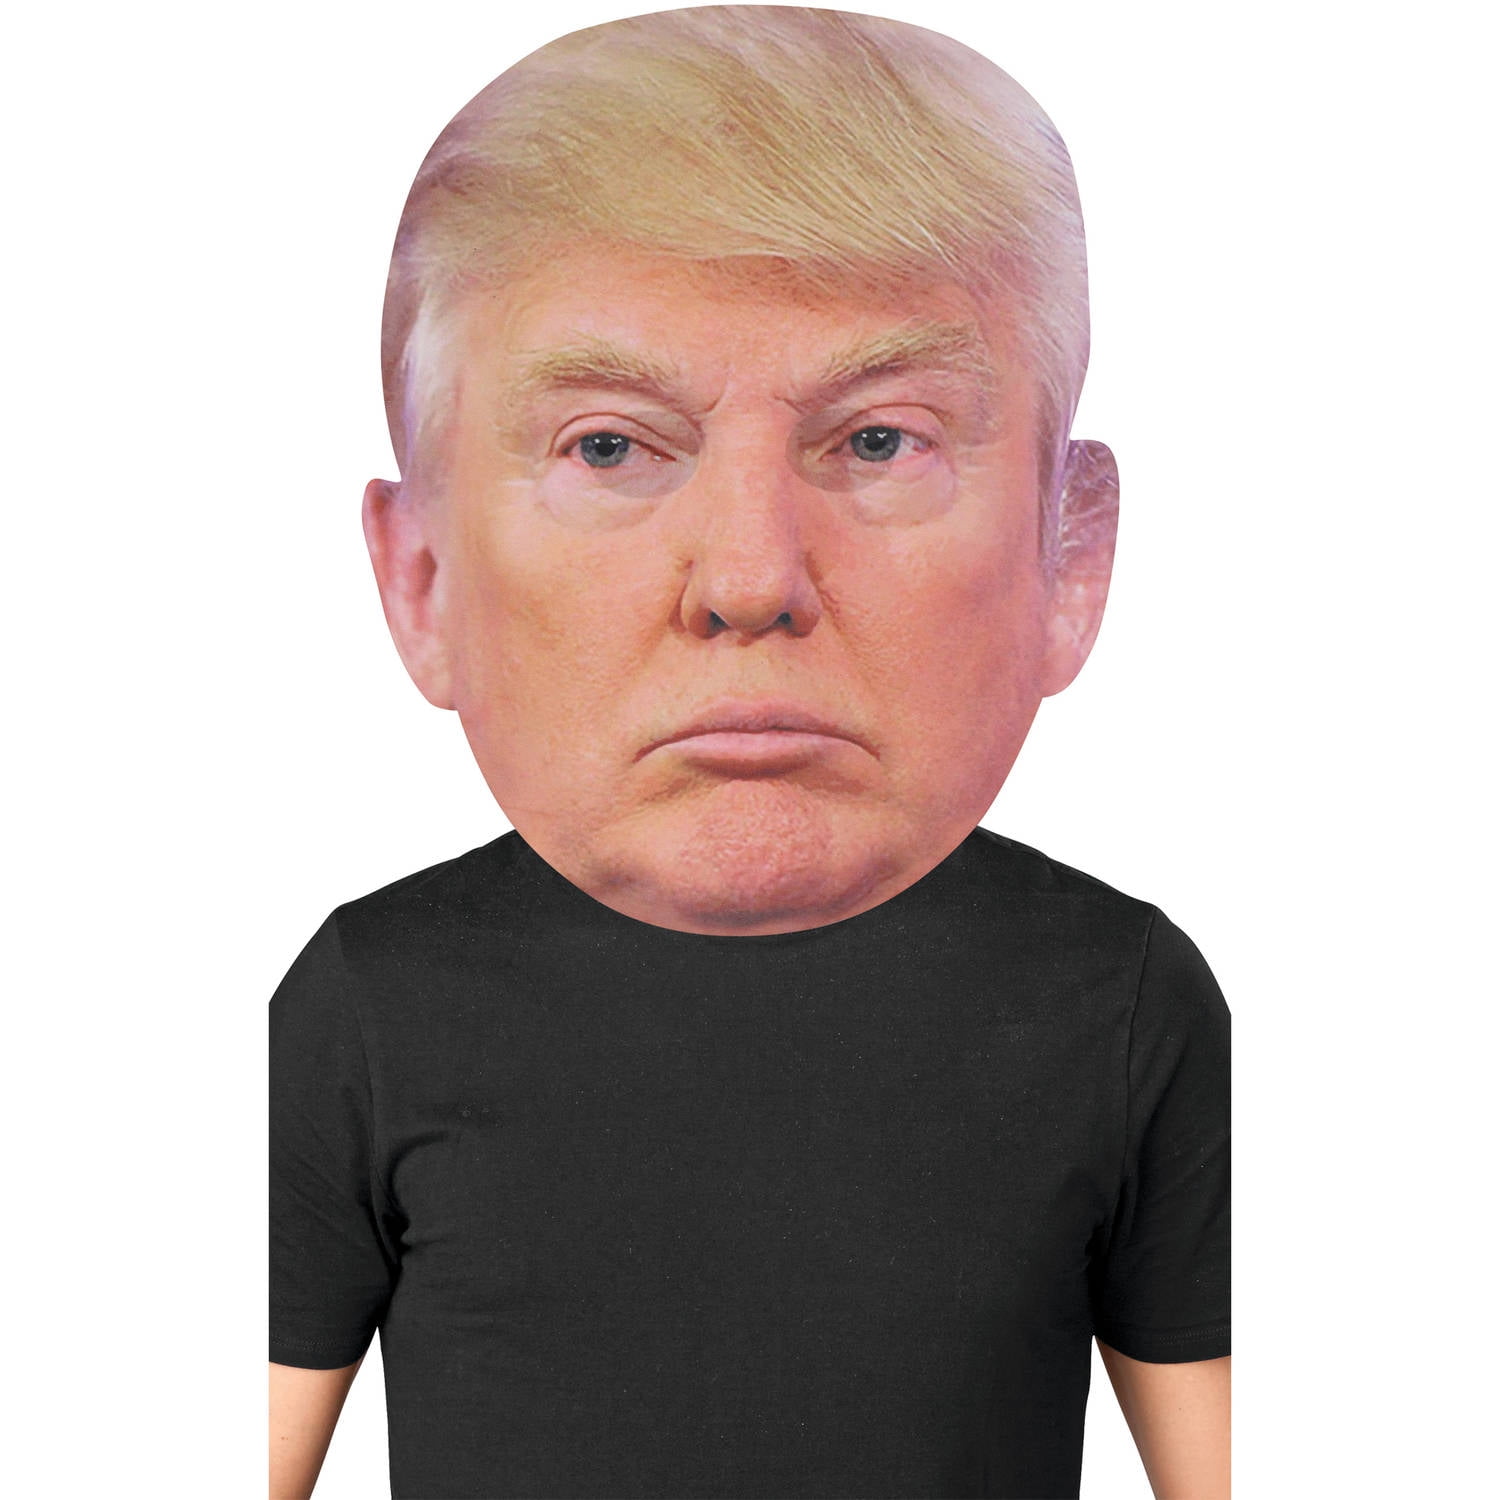 Entreprenør Pogo stick spring Patent Trump Giant Mask Adult Halloween Accessory - Walmart.com